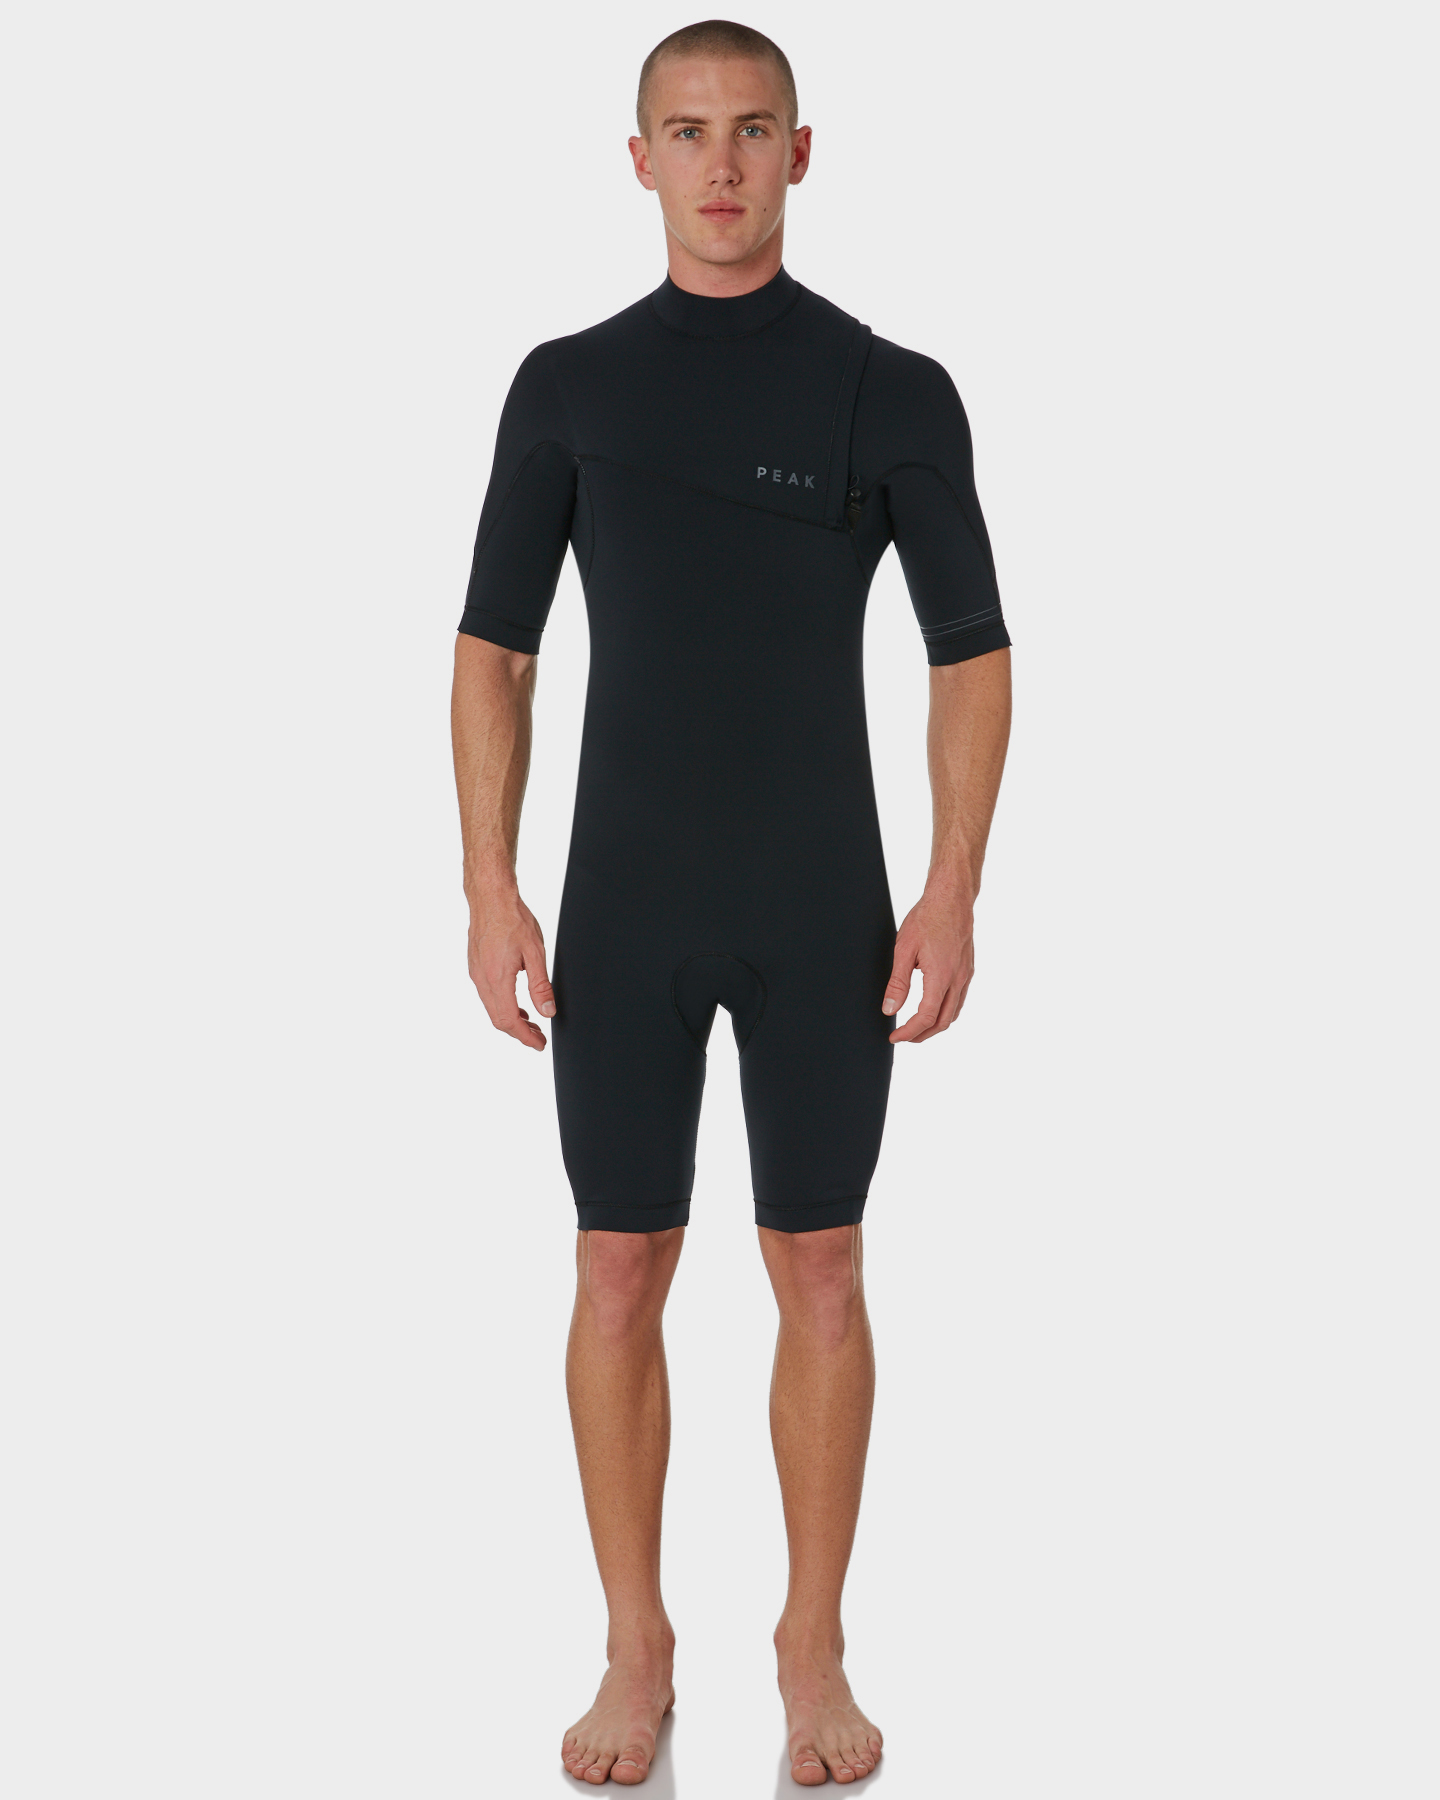 Peak Climax Pro 2Mm Ss Spring Suit - Black | SurfStitch